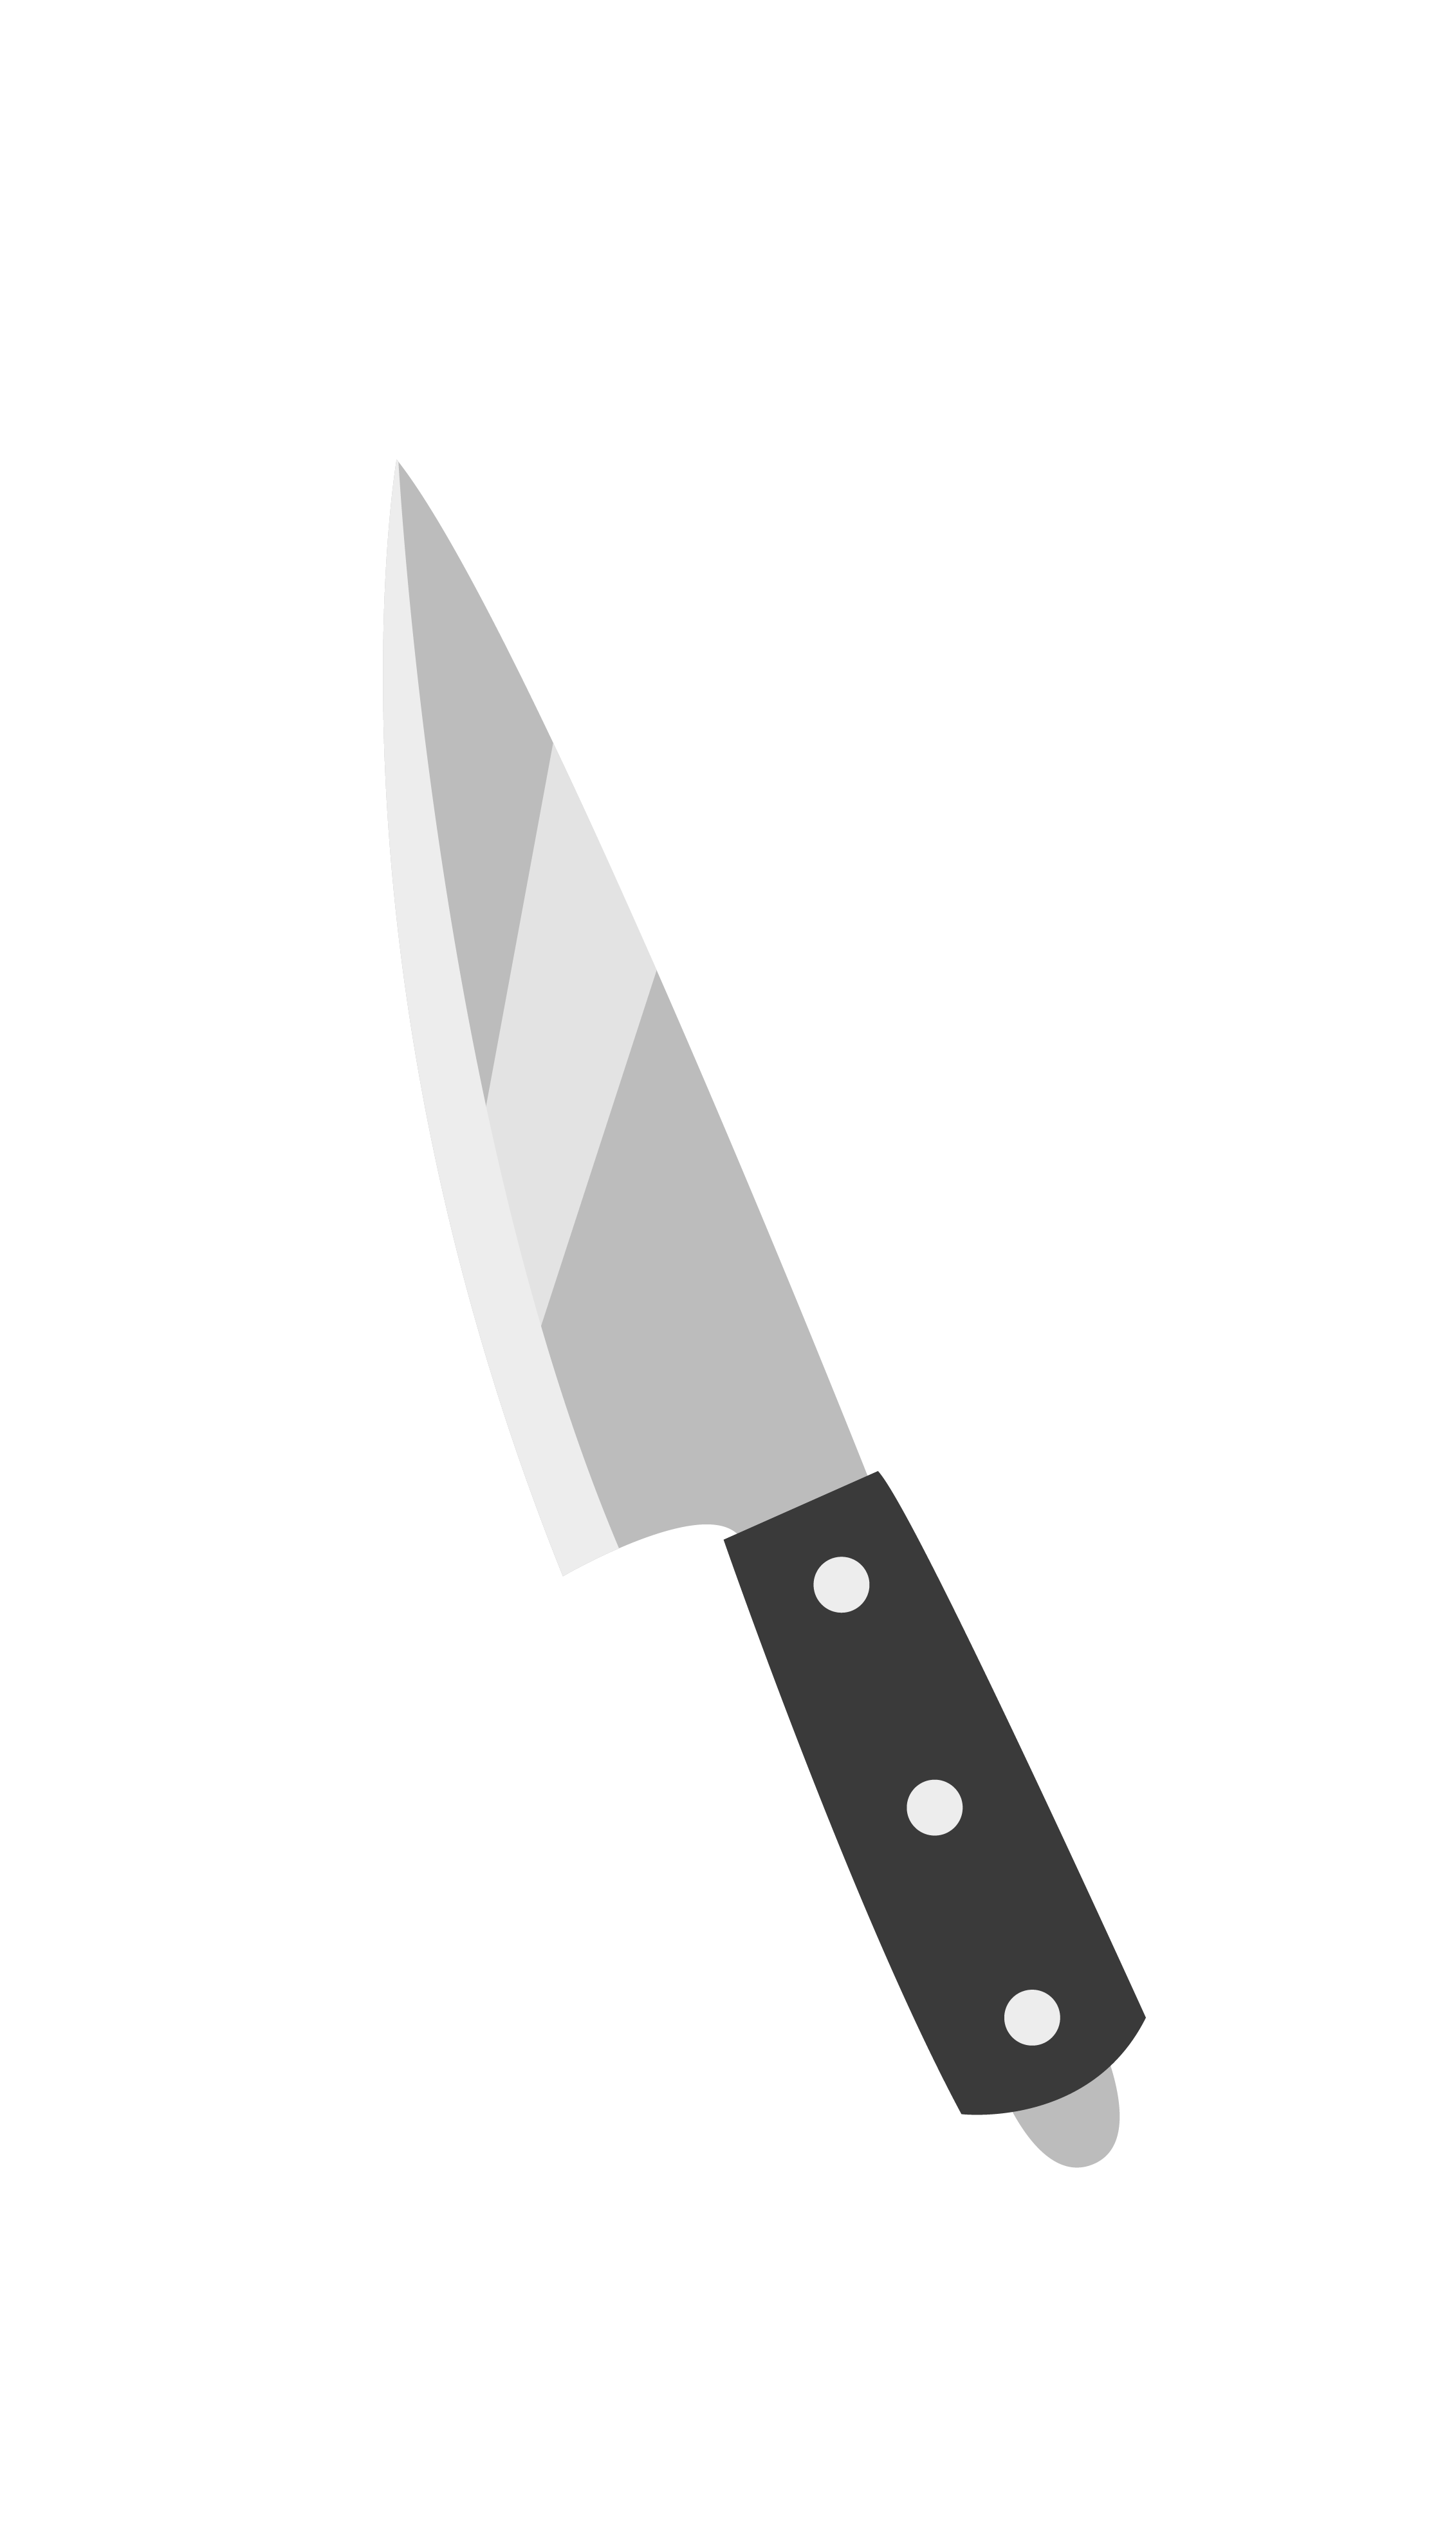 Kitchen knife Throwing knife - Vector Silver Knife Fruit Knife png